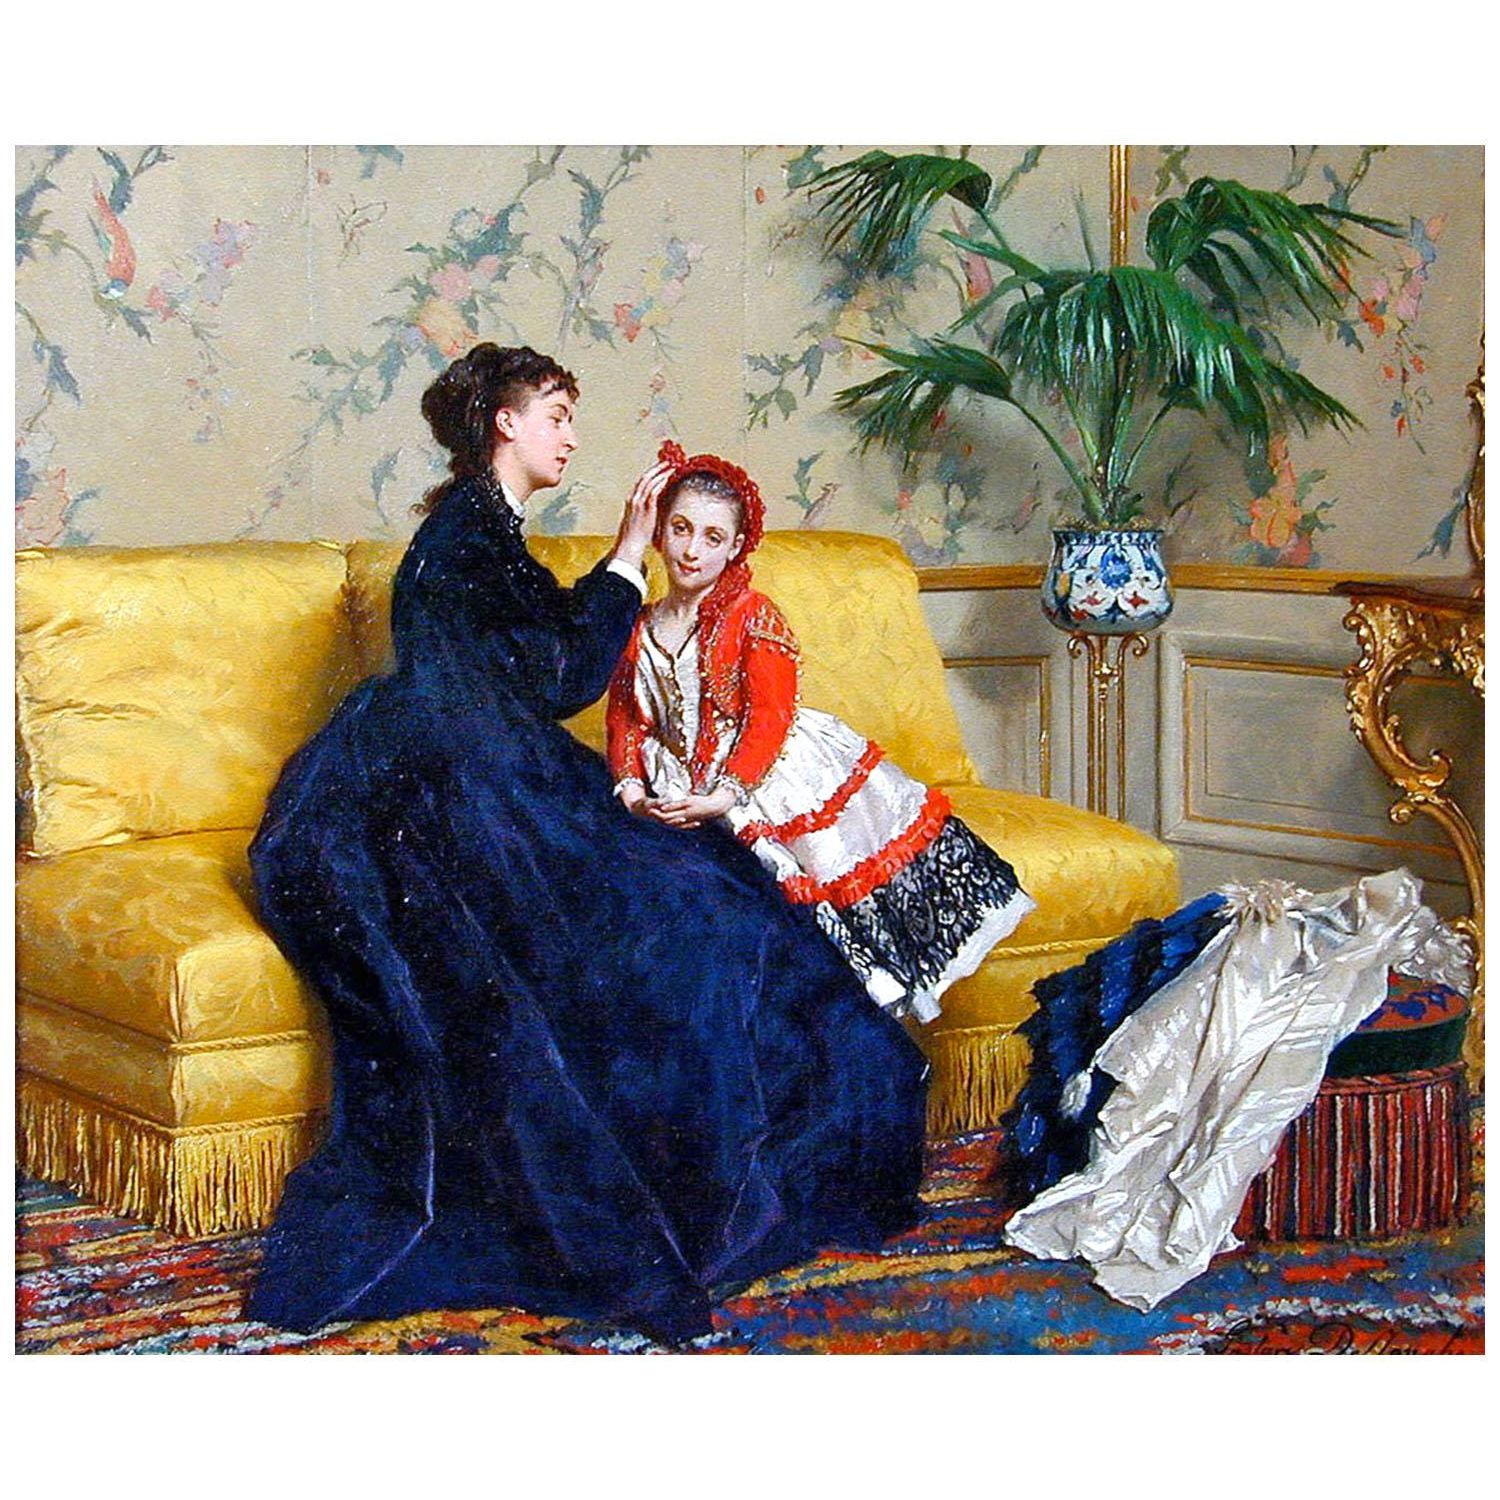 Gustave De Jonghe. Aller au bal. 1868. Private collection